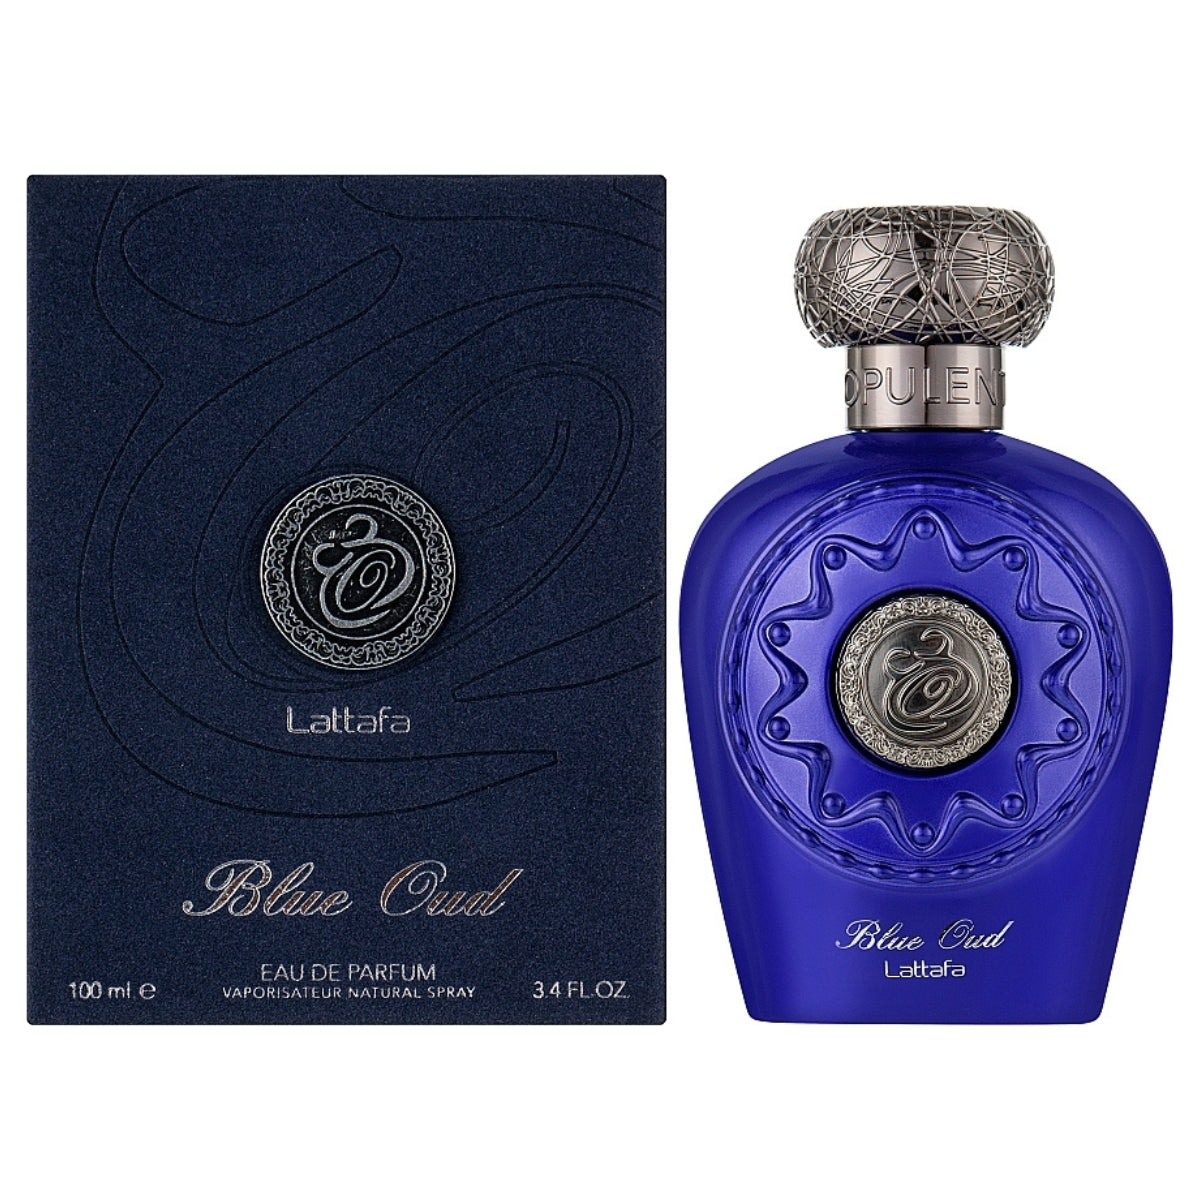 Lattafa Perfume Opulent Blue Oud Eau de Parfum 100ml